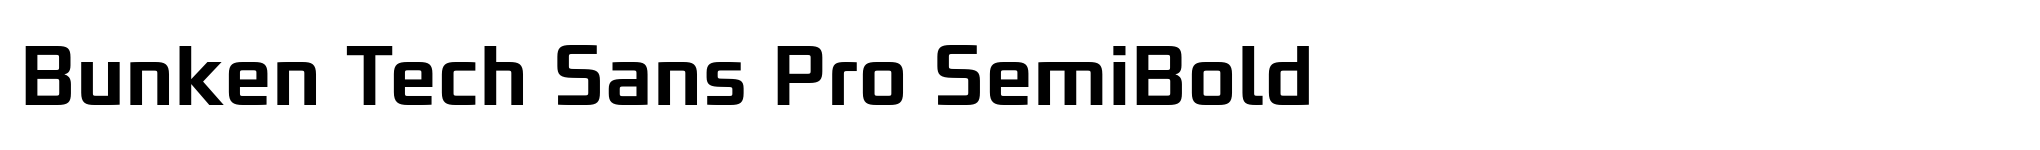 Bunken Tech Sans Pro SemiBold image